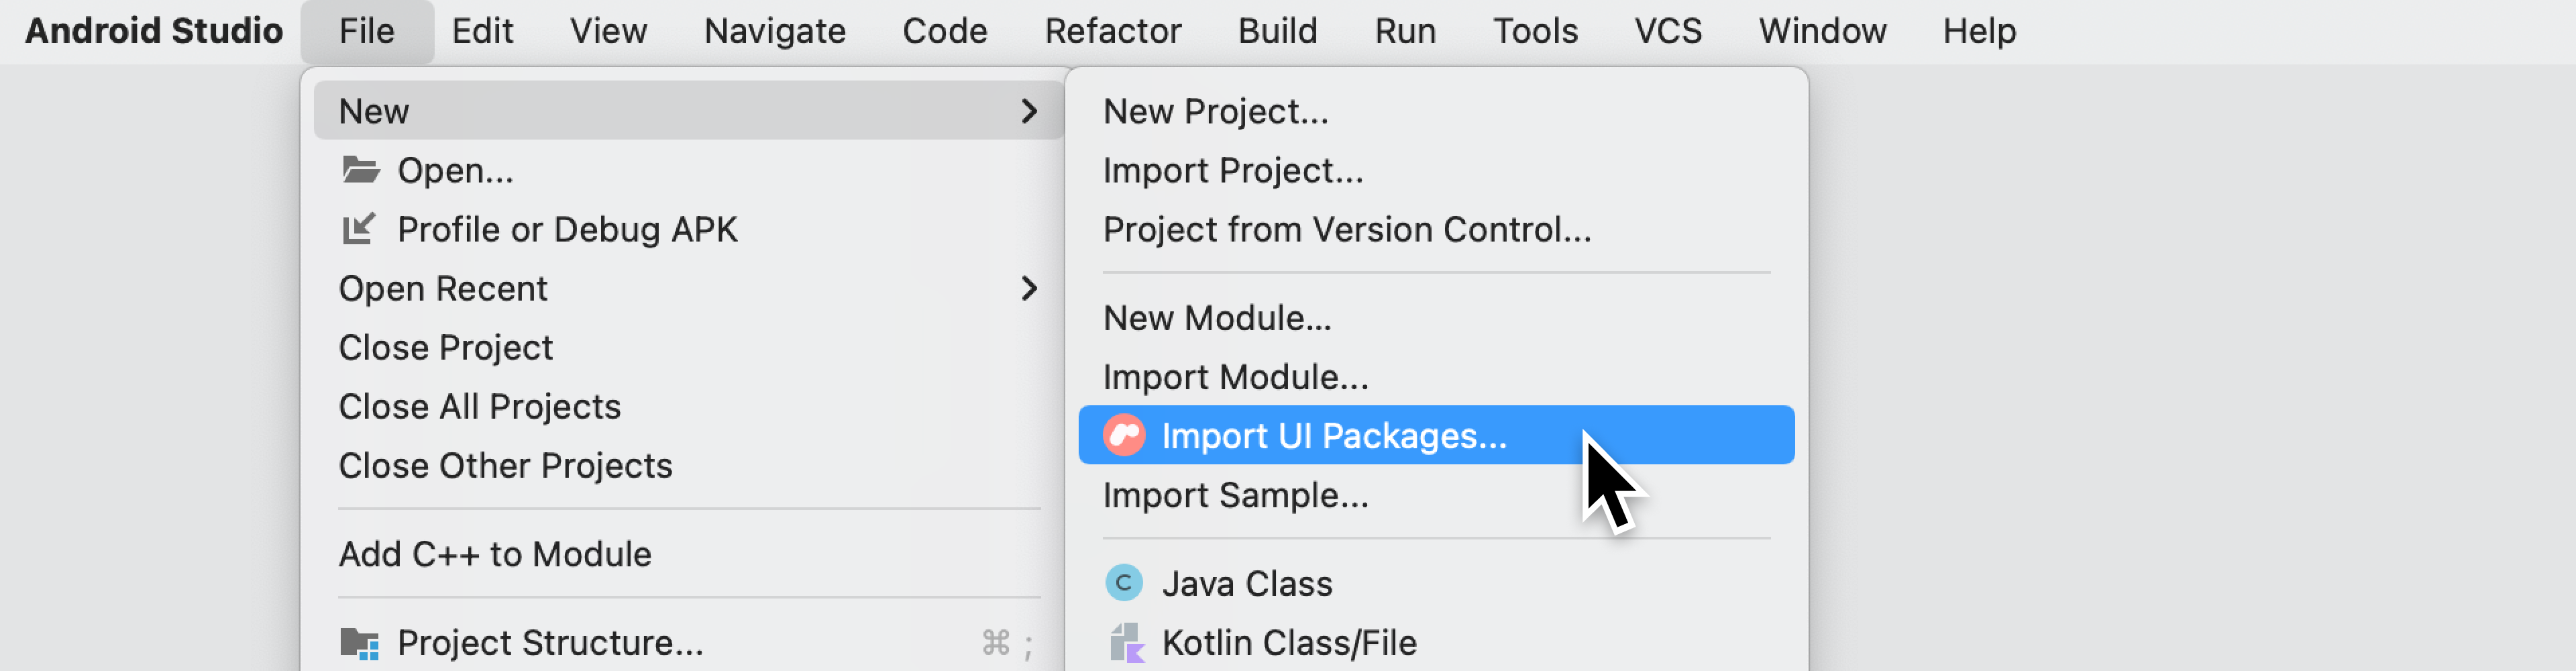 Opzione Importa pacchetti UI... nel menu File